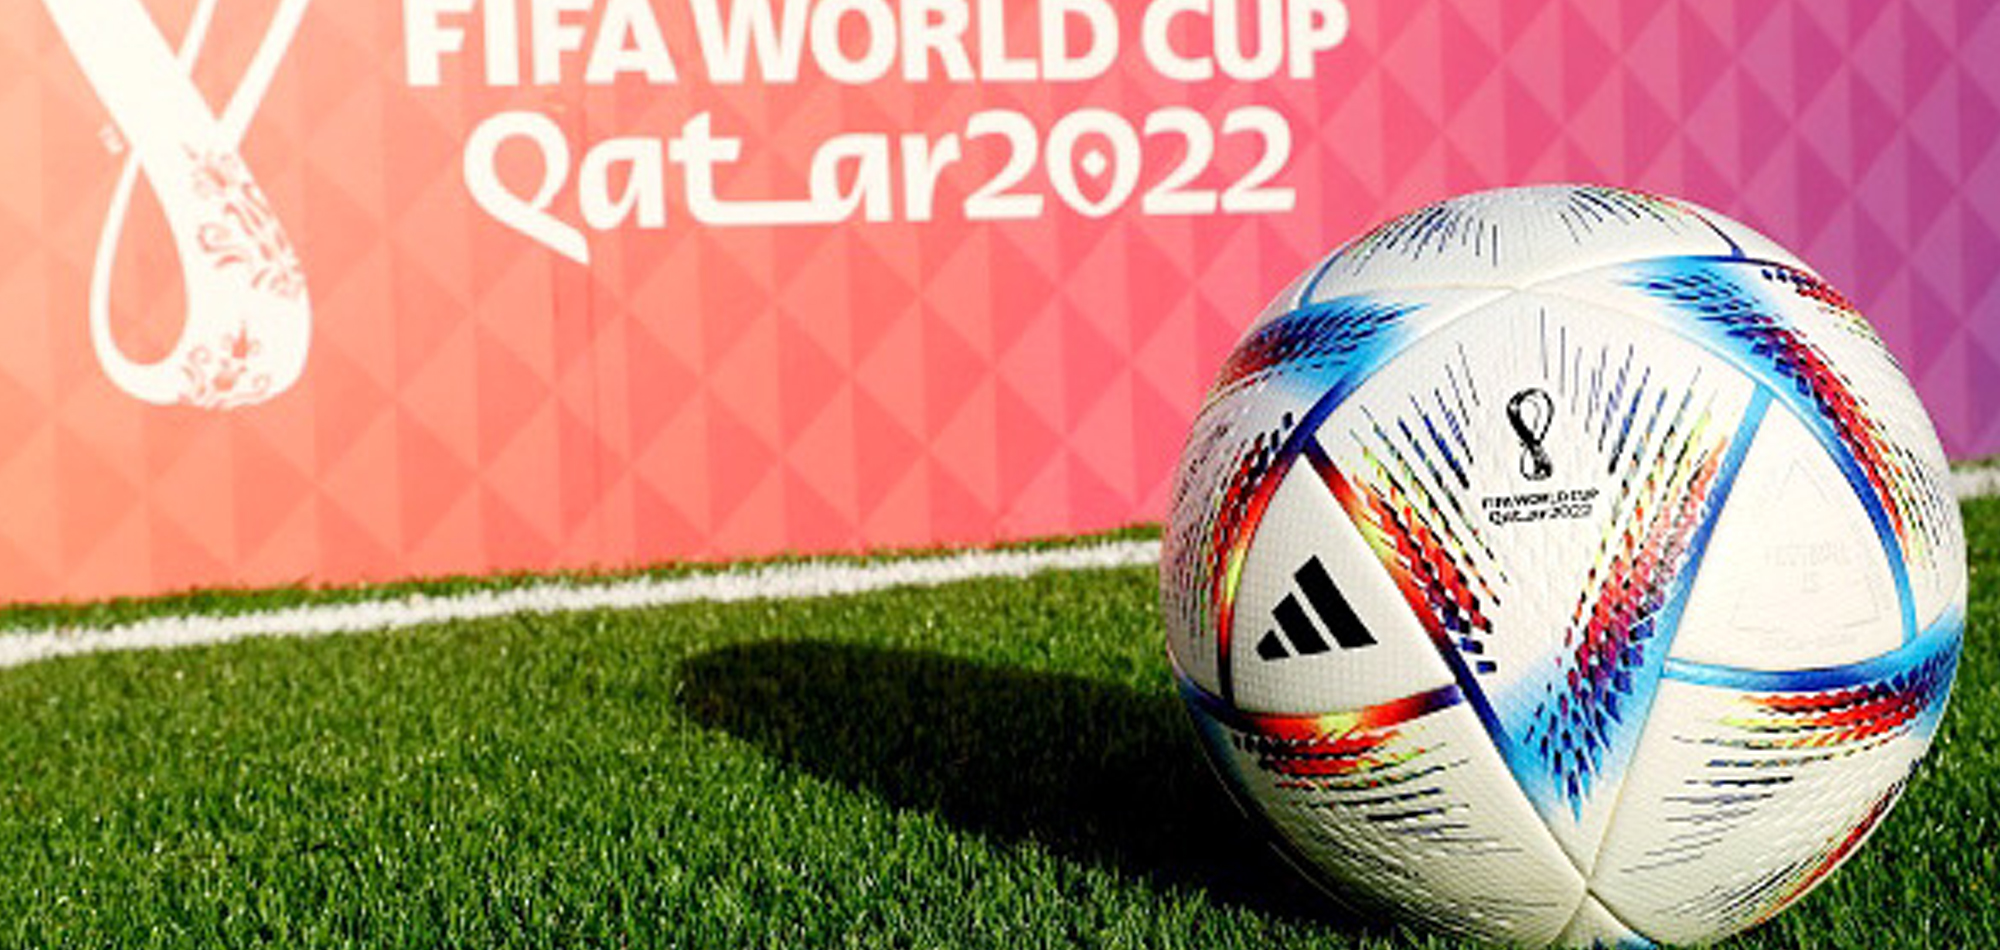 FIFA WORLD CUP QATAR 2022 TICKET SALES REACH 2.45 MILLION